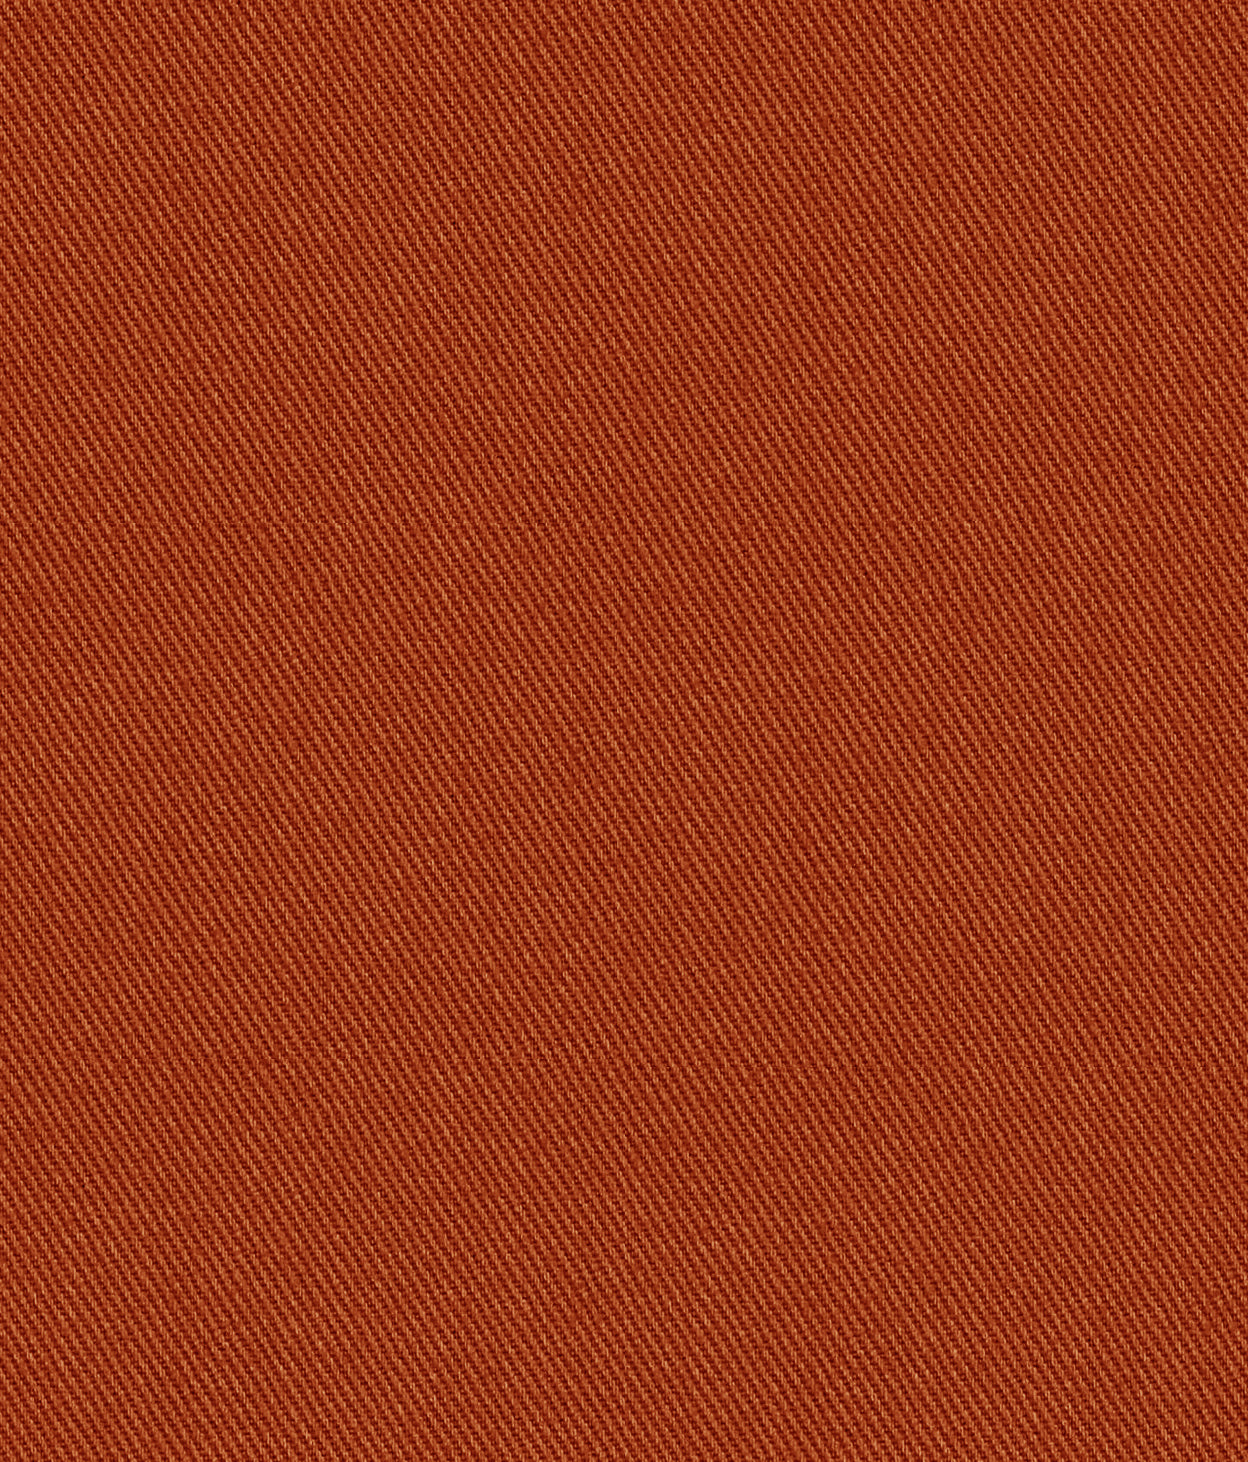 Cotton Blend Fabric in Korma Orange